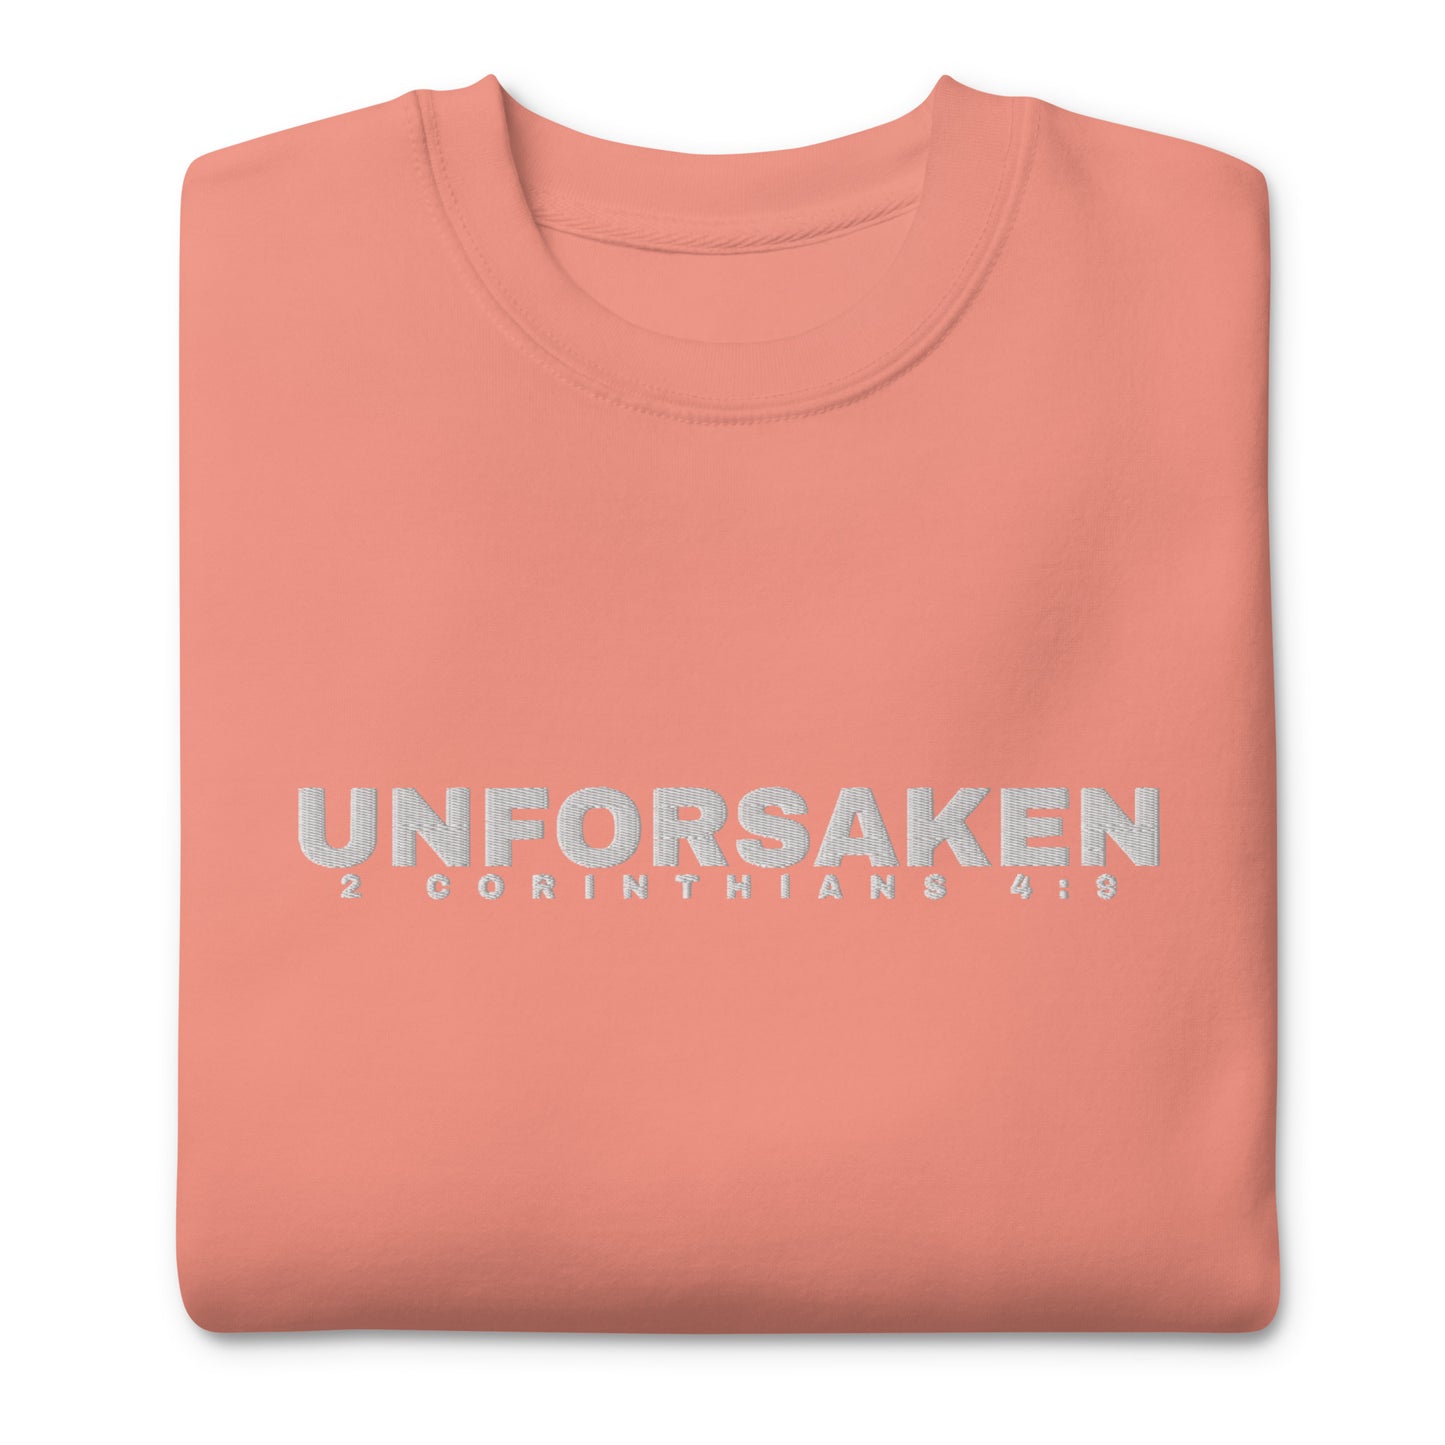 UNFORSAKEN 002 OG Embroidered Training Crewneck